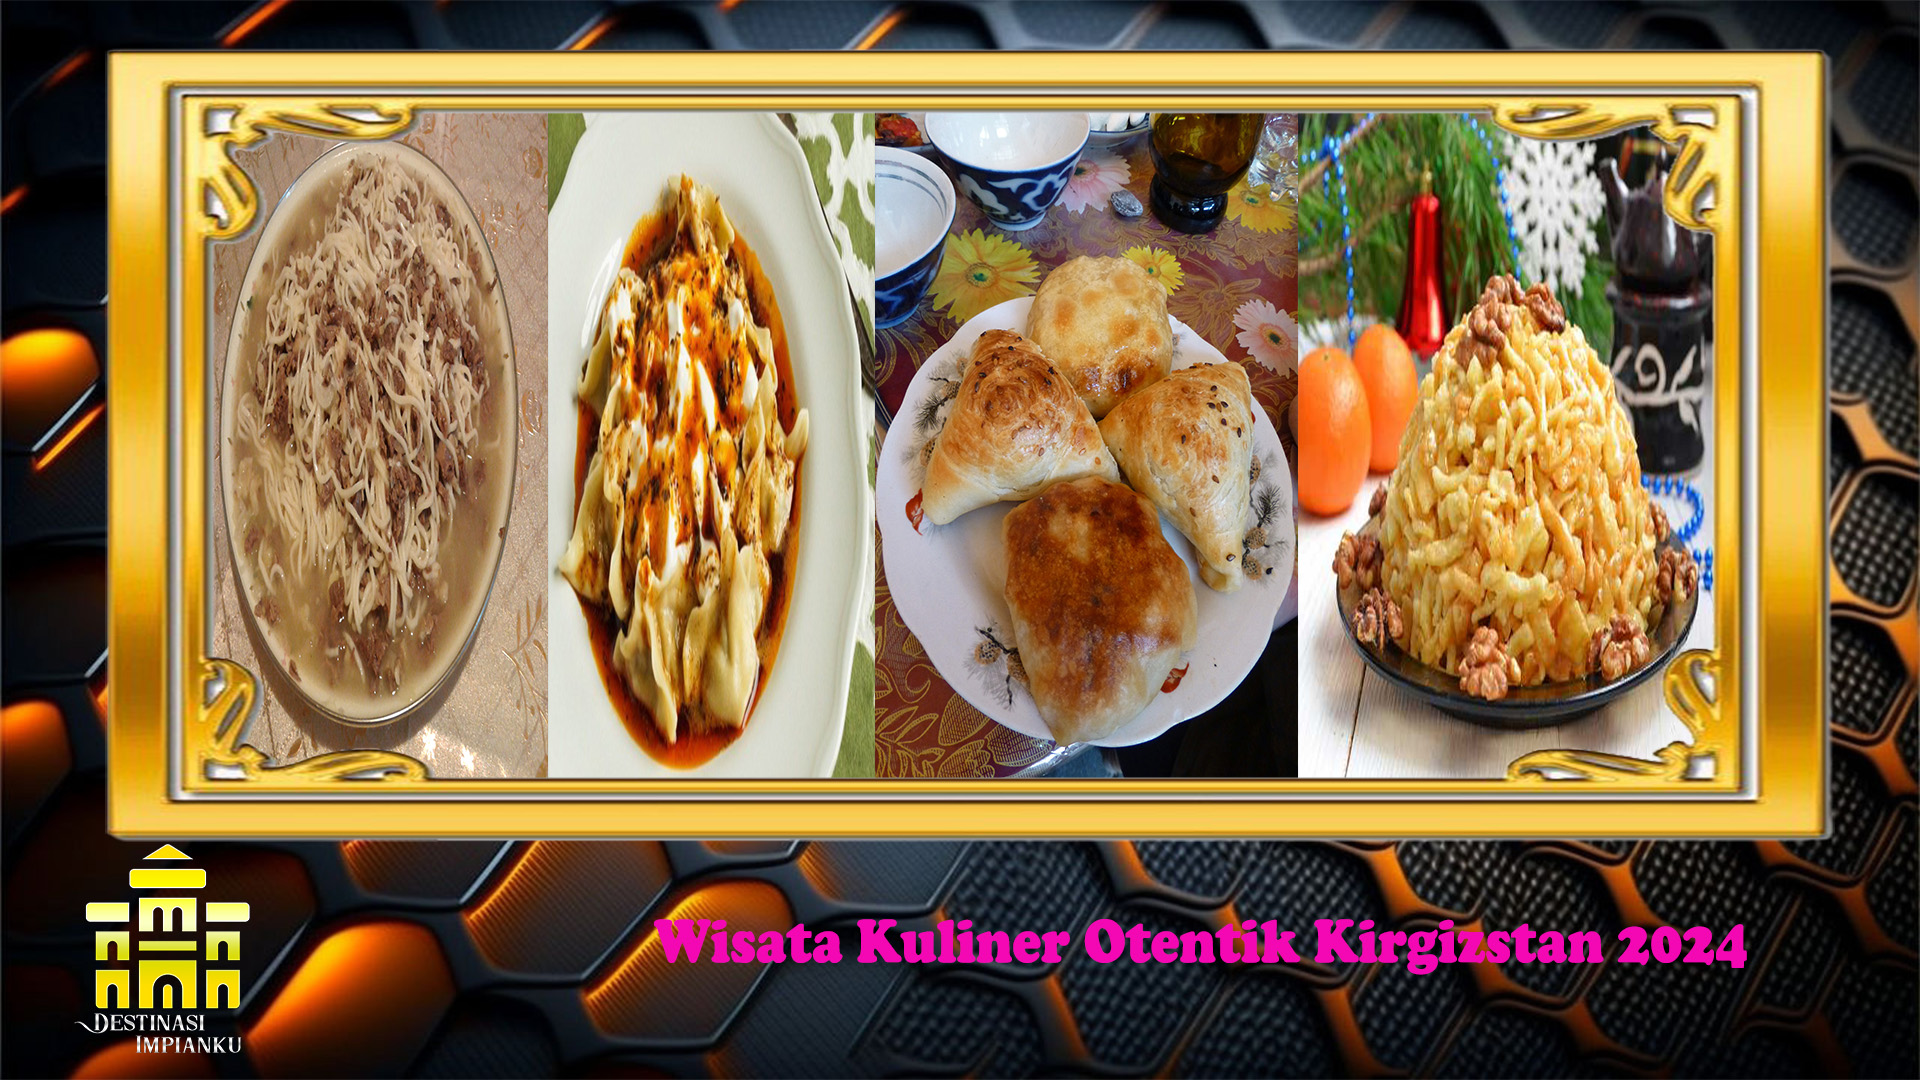 Wisata Kuliner Otentik Kirgizstan 2024